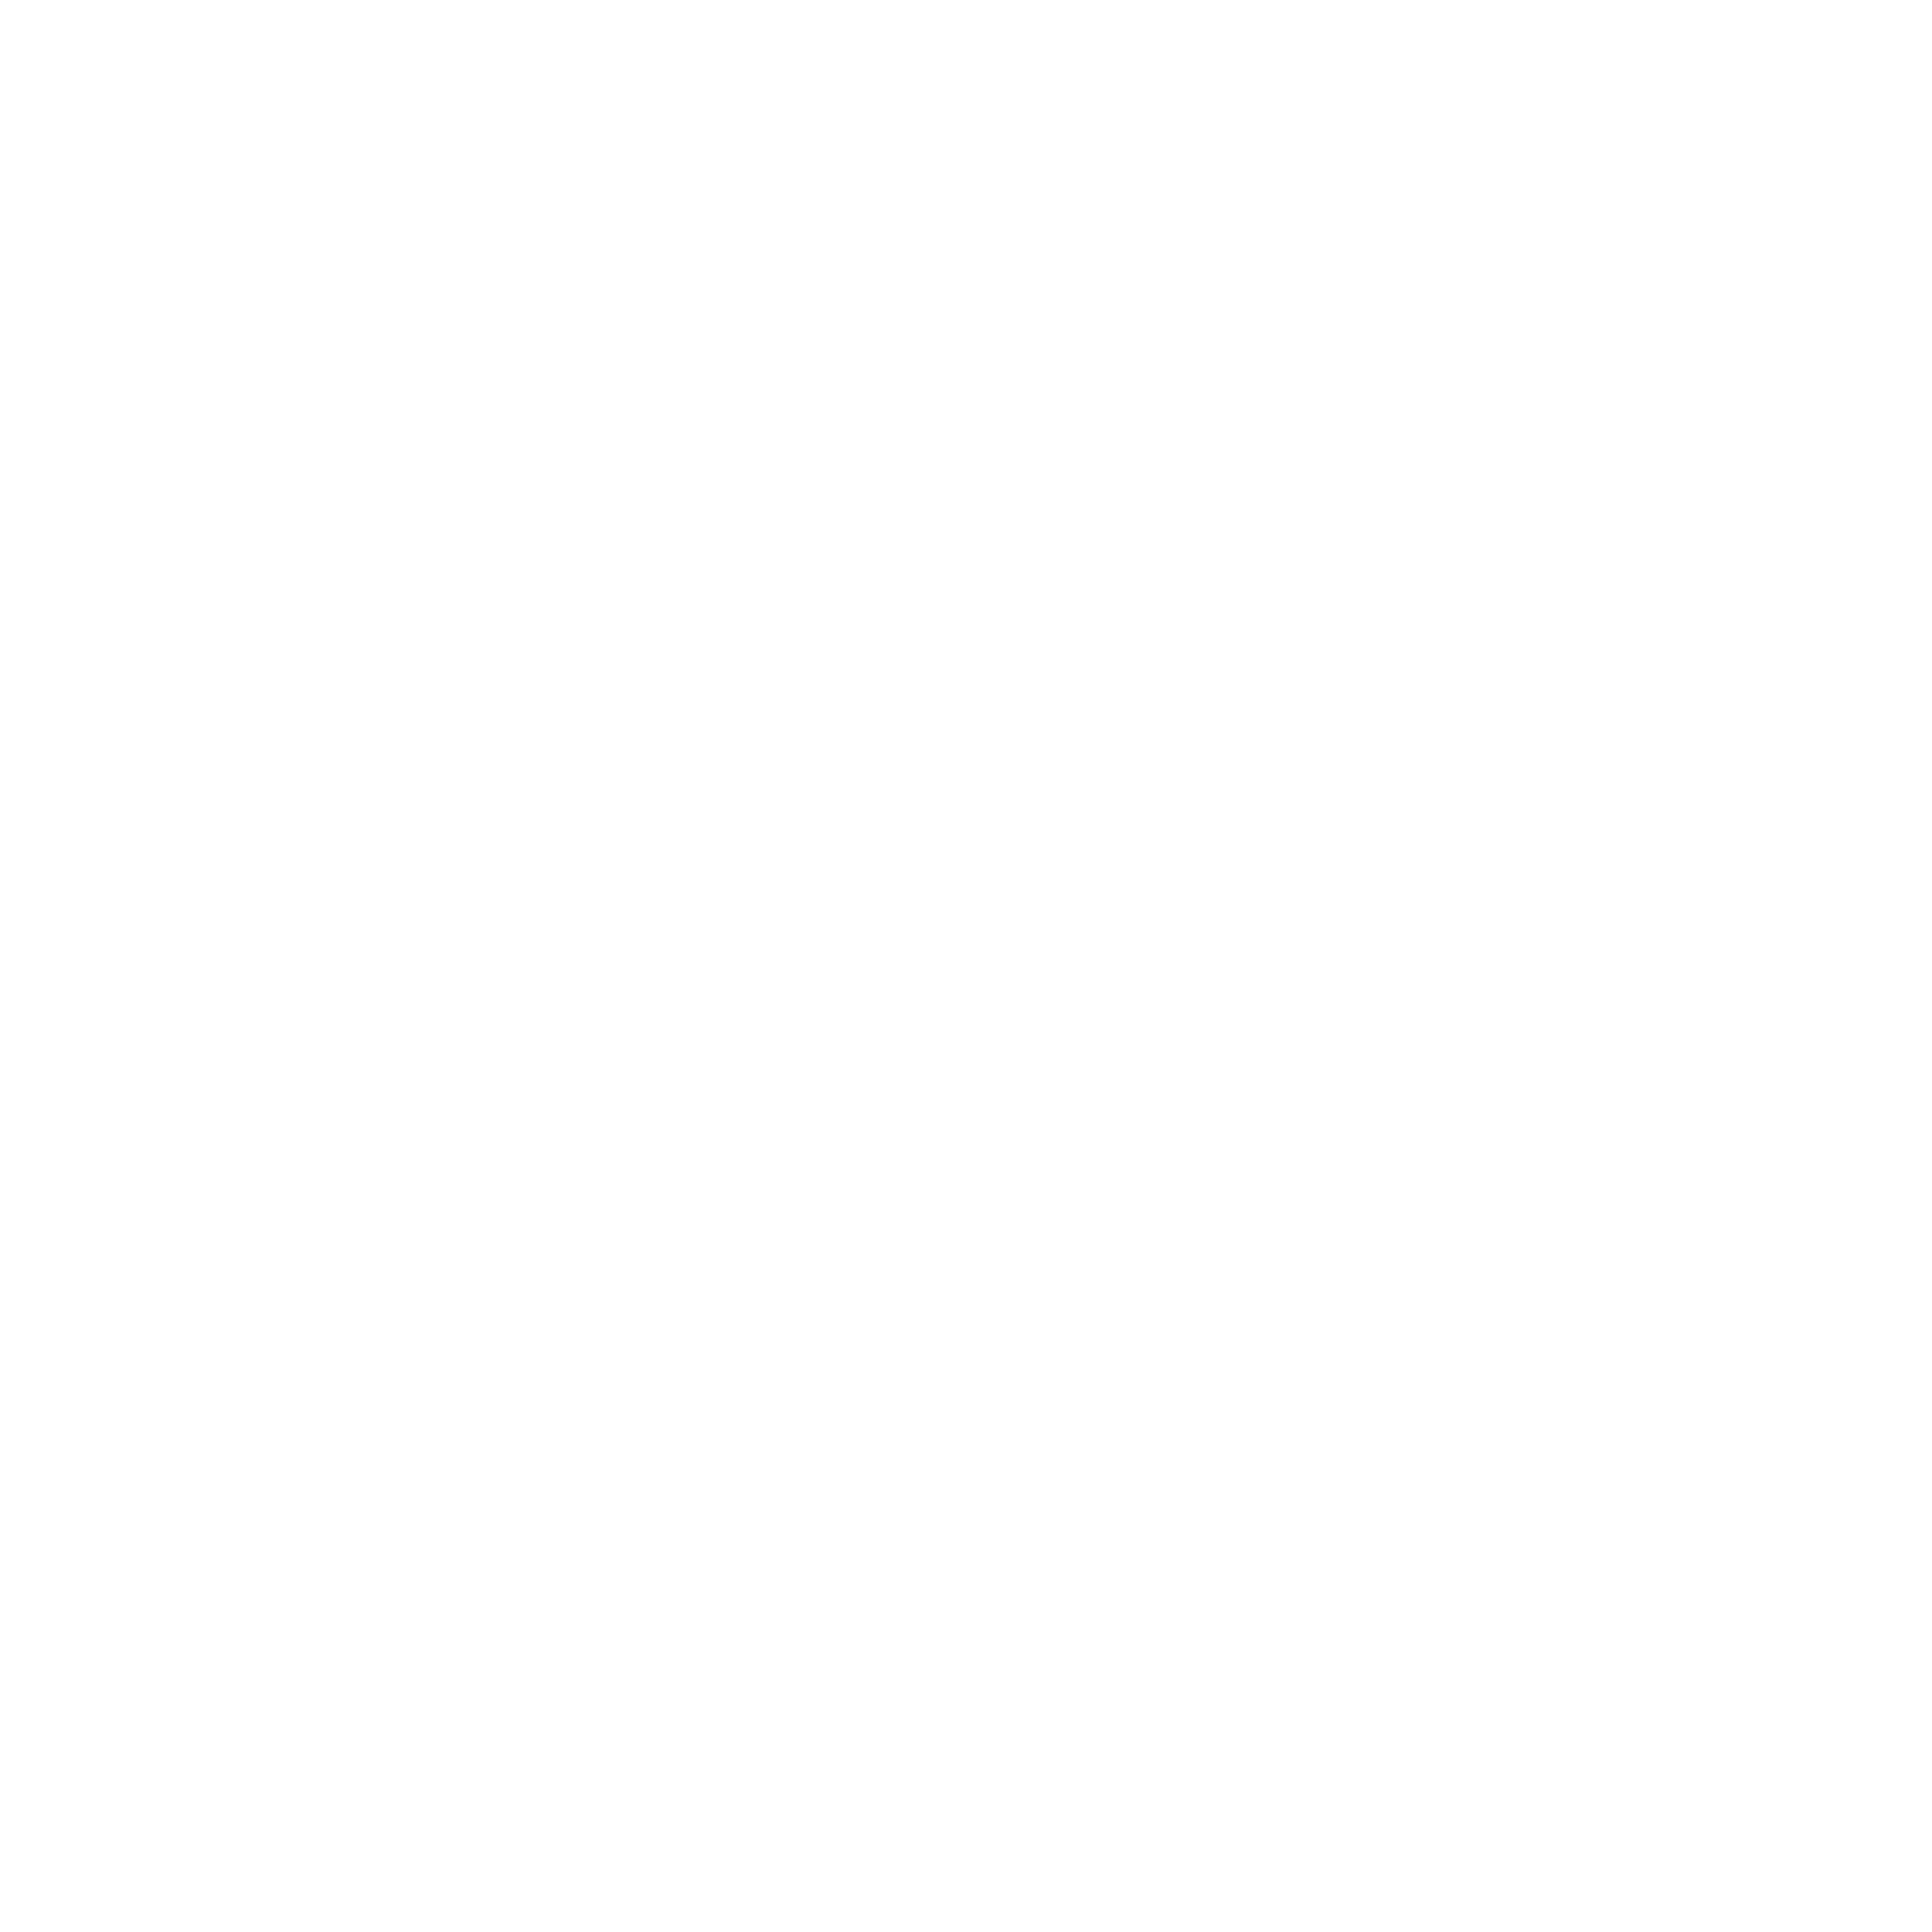 Filimo Logo Transparent Picture